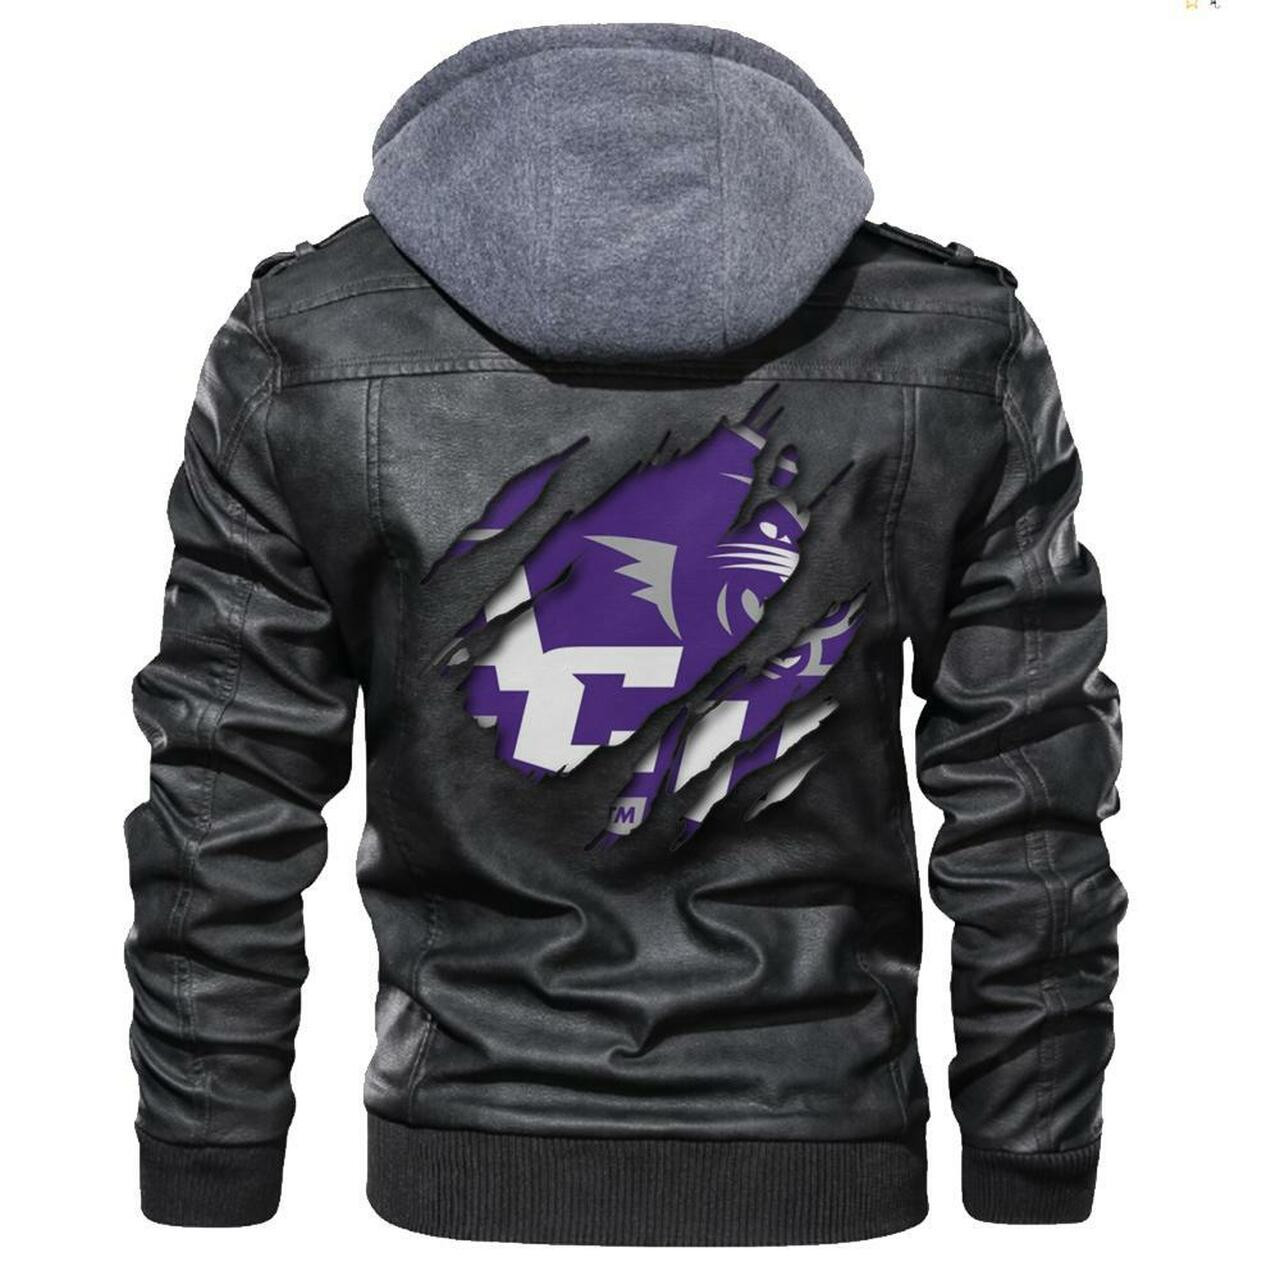 Top leather jacket Sells Best on Techcomshop 88